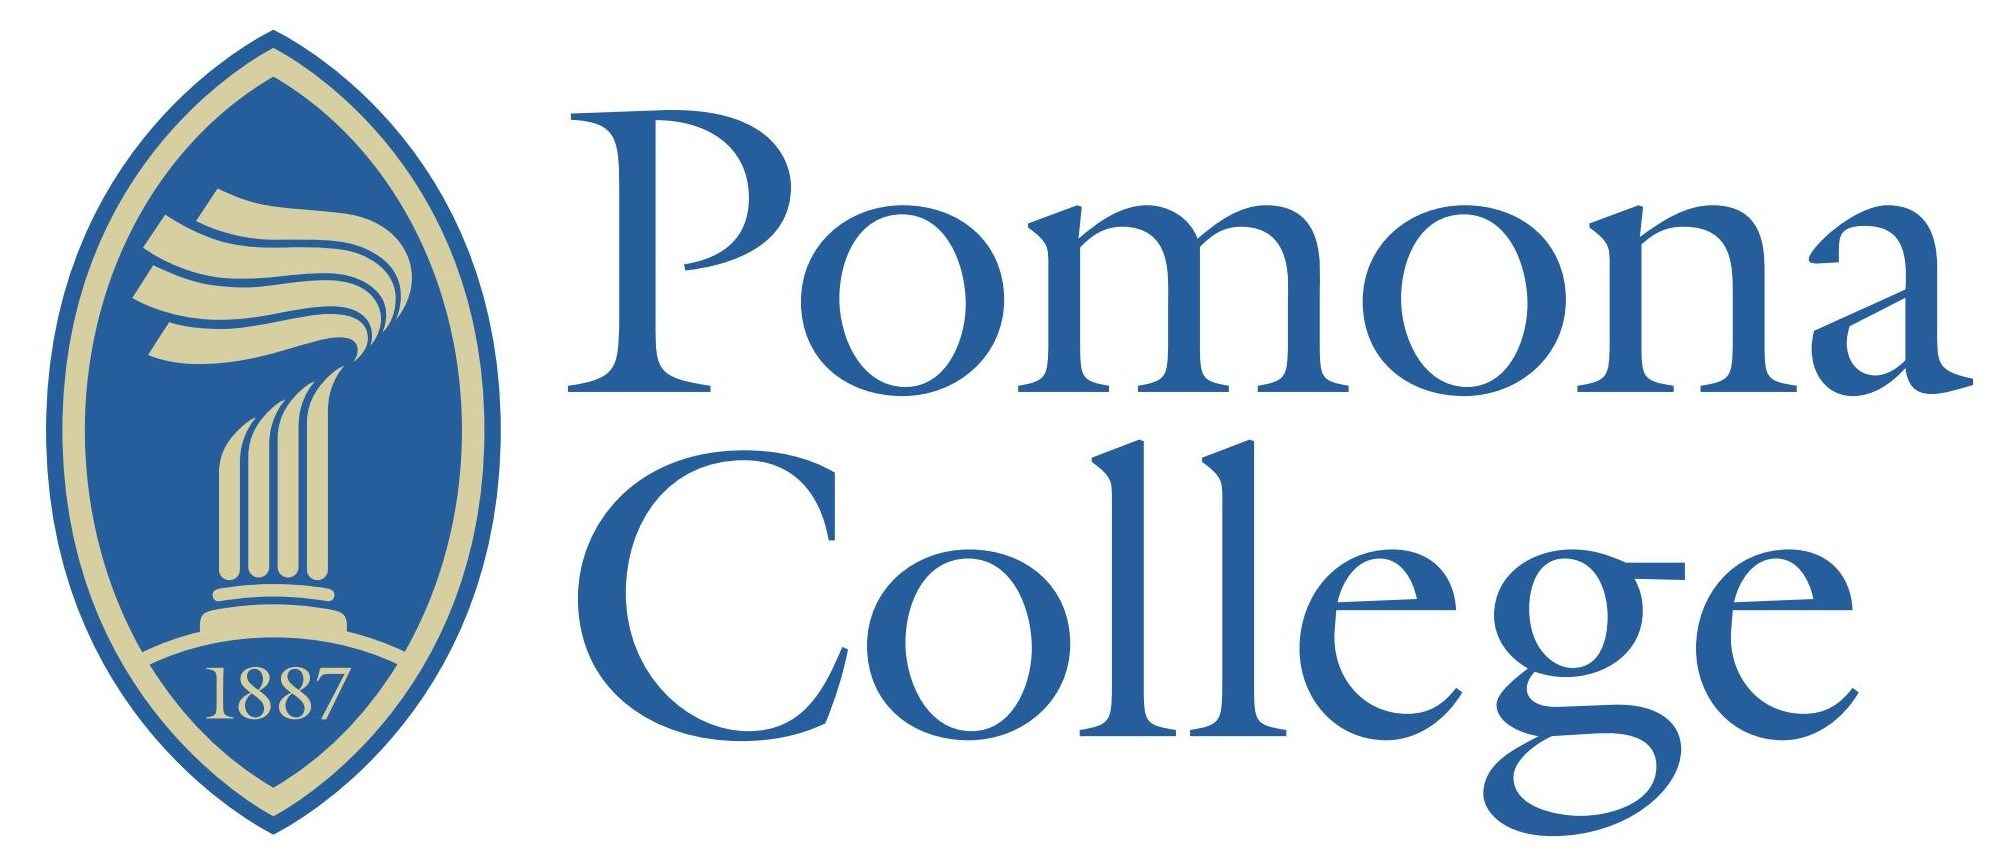 Pomona College Logo png